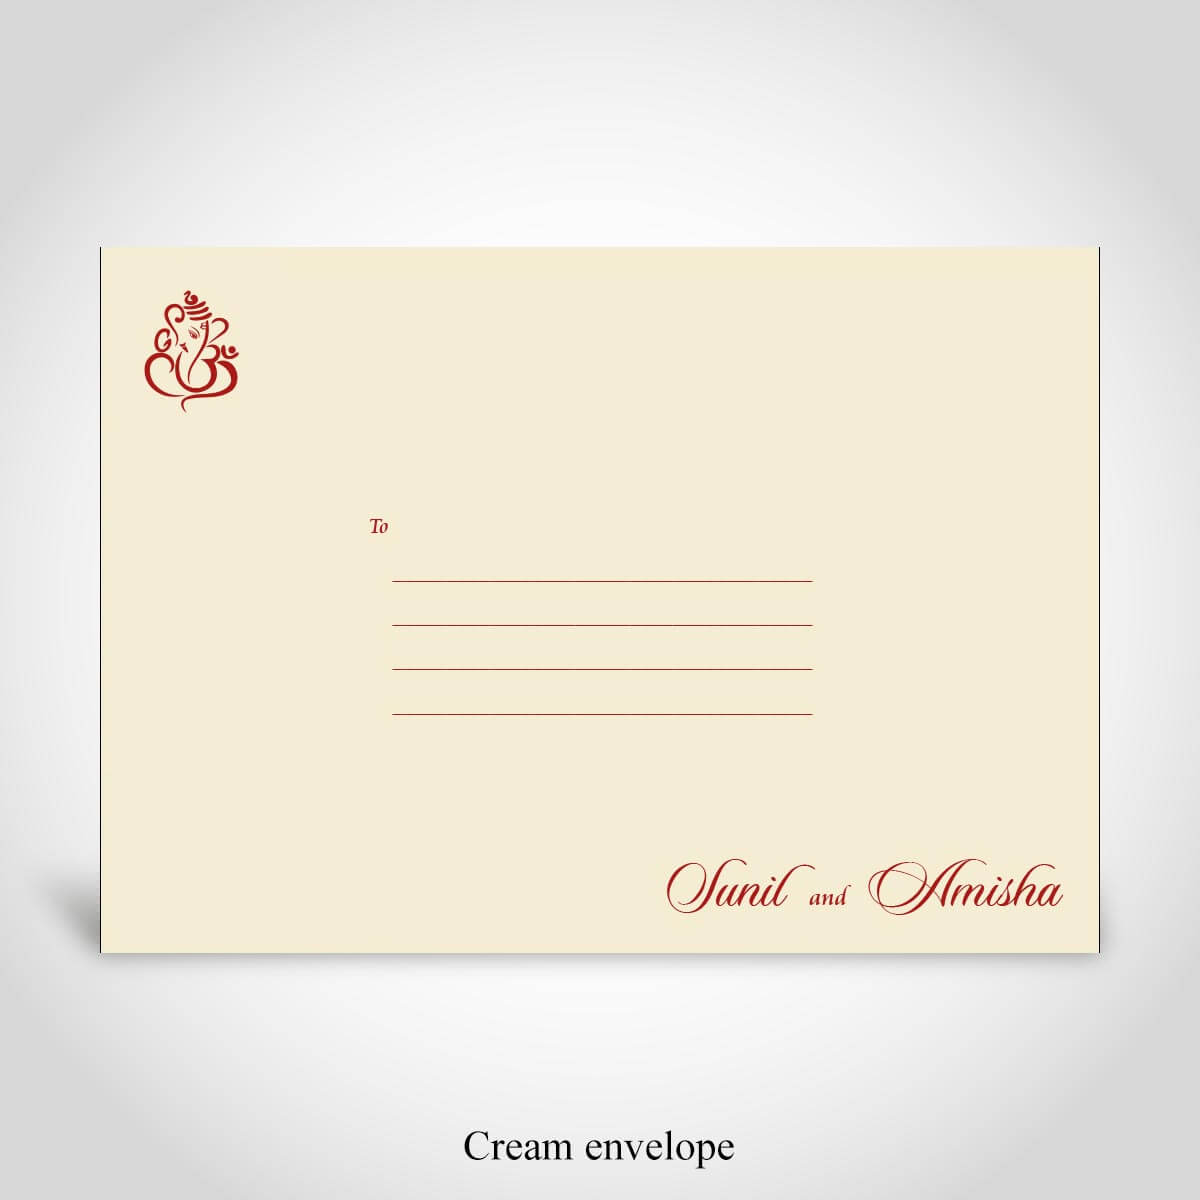 Dark Red, Gold Foiled Hindu Wedding Card – CFK395